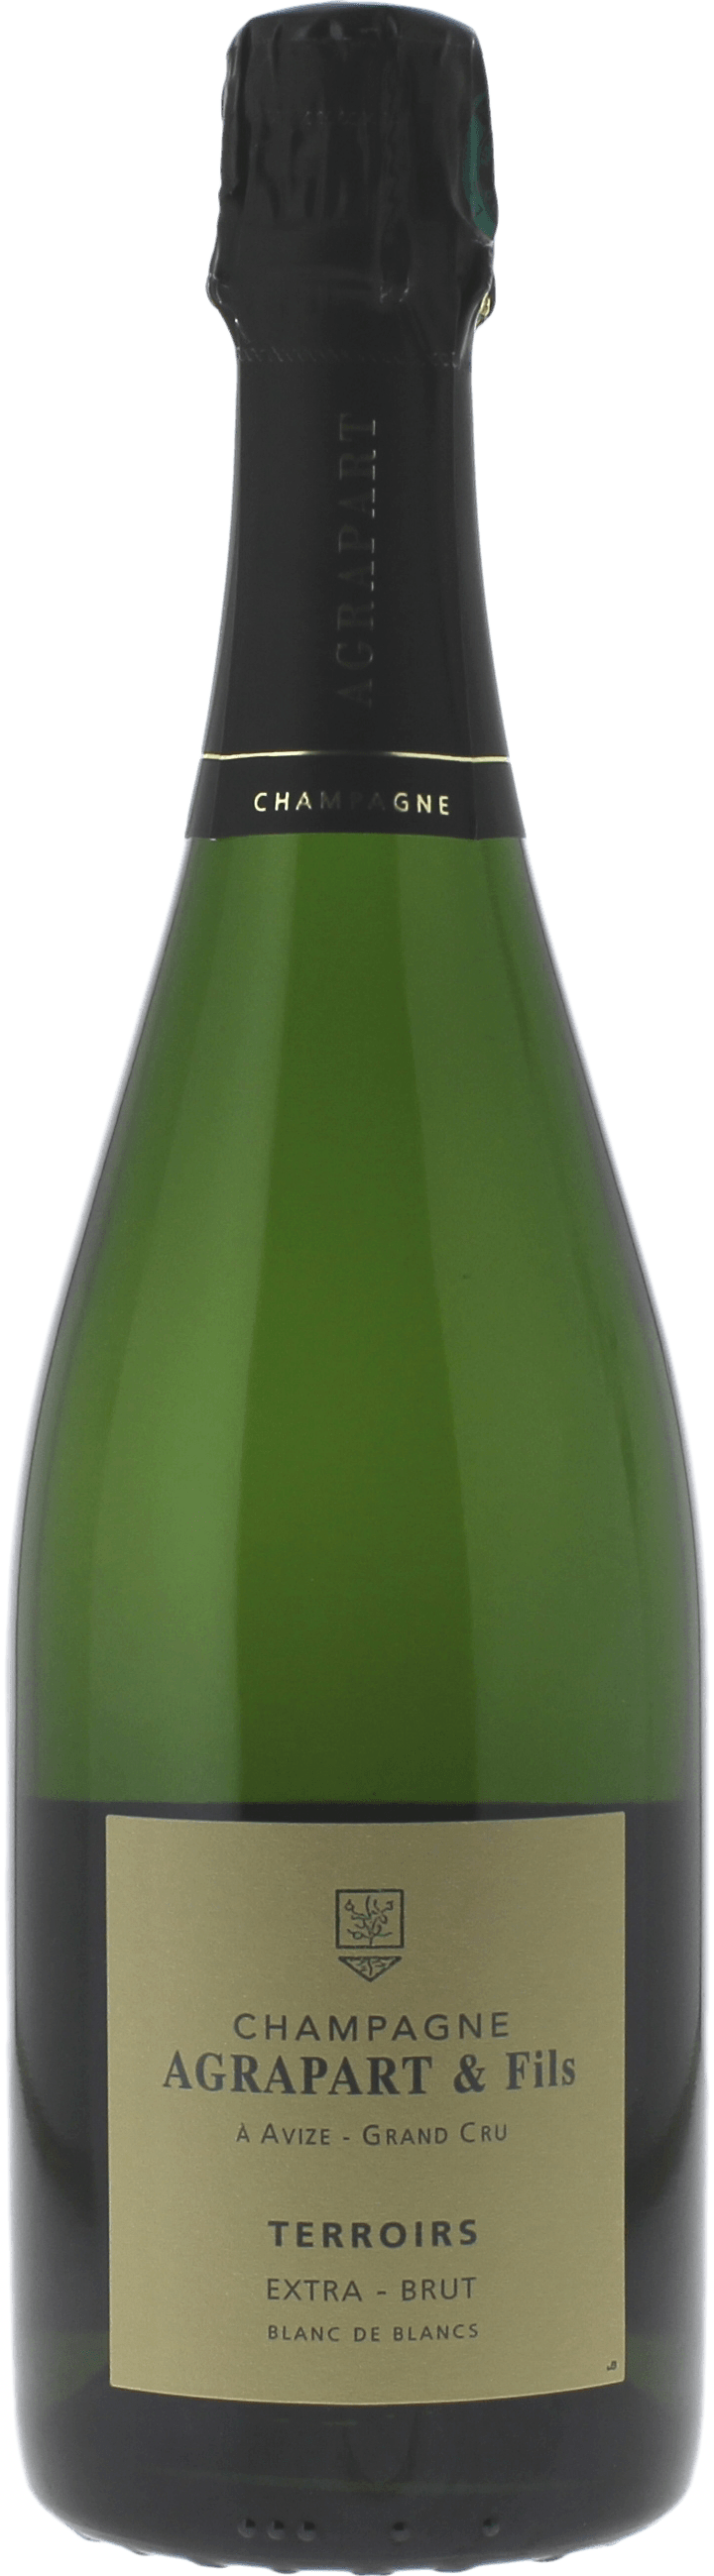 Agrapart  terroirs extra brut blanc de blancs grand cru  Agrapart & Fils, Champagne